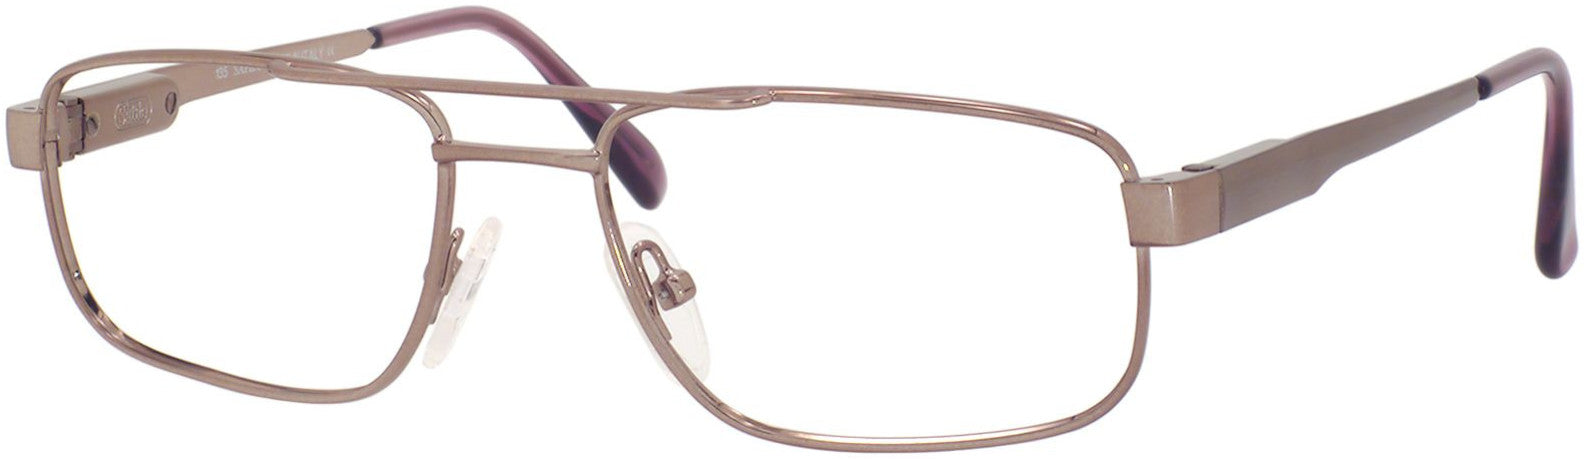  Elasta 3070 Rectangular Eyeglasses 02U9-02U9  Brown (00 Demo Lens)